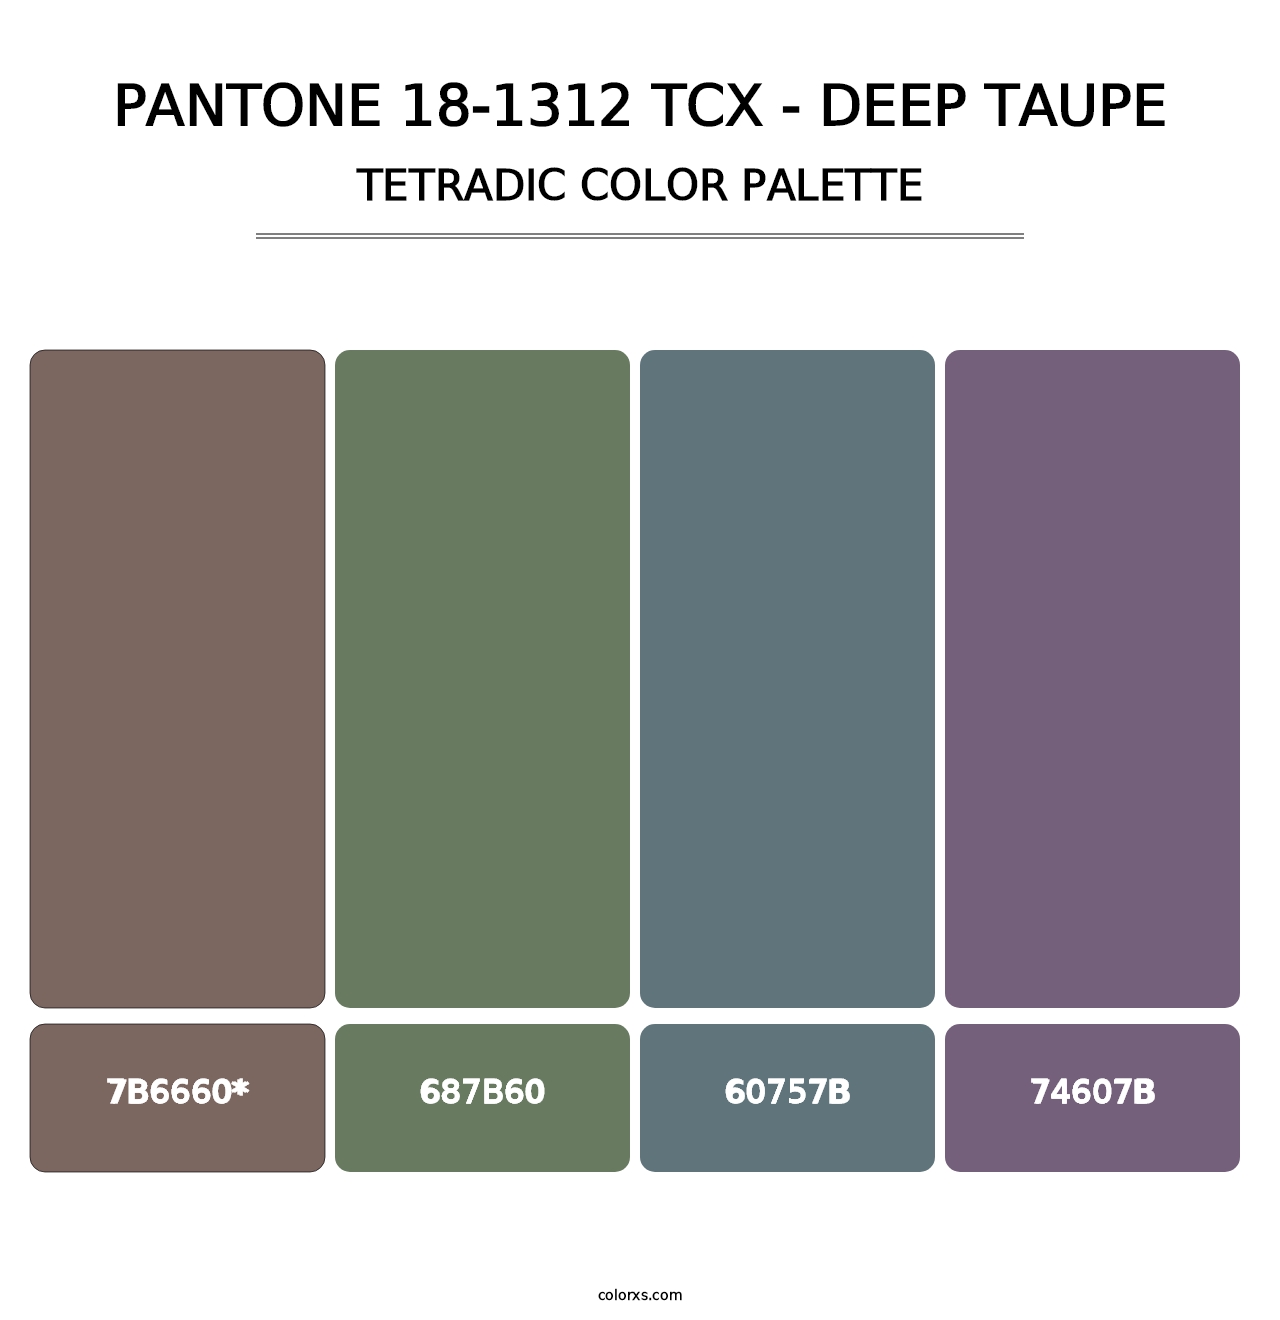 PANTONE 18-1312 TCX - Deep Taupe - Tetradic Color Palette